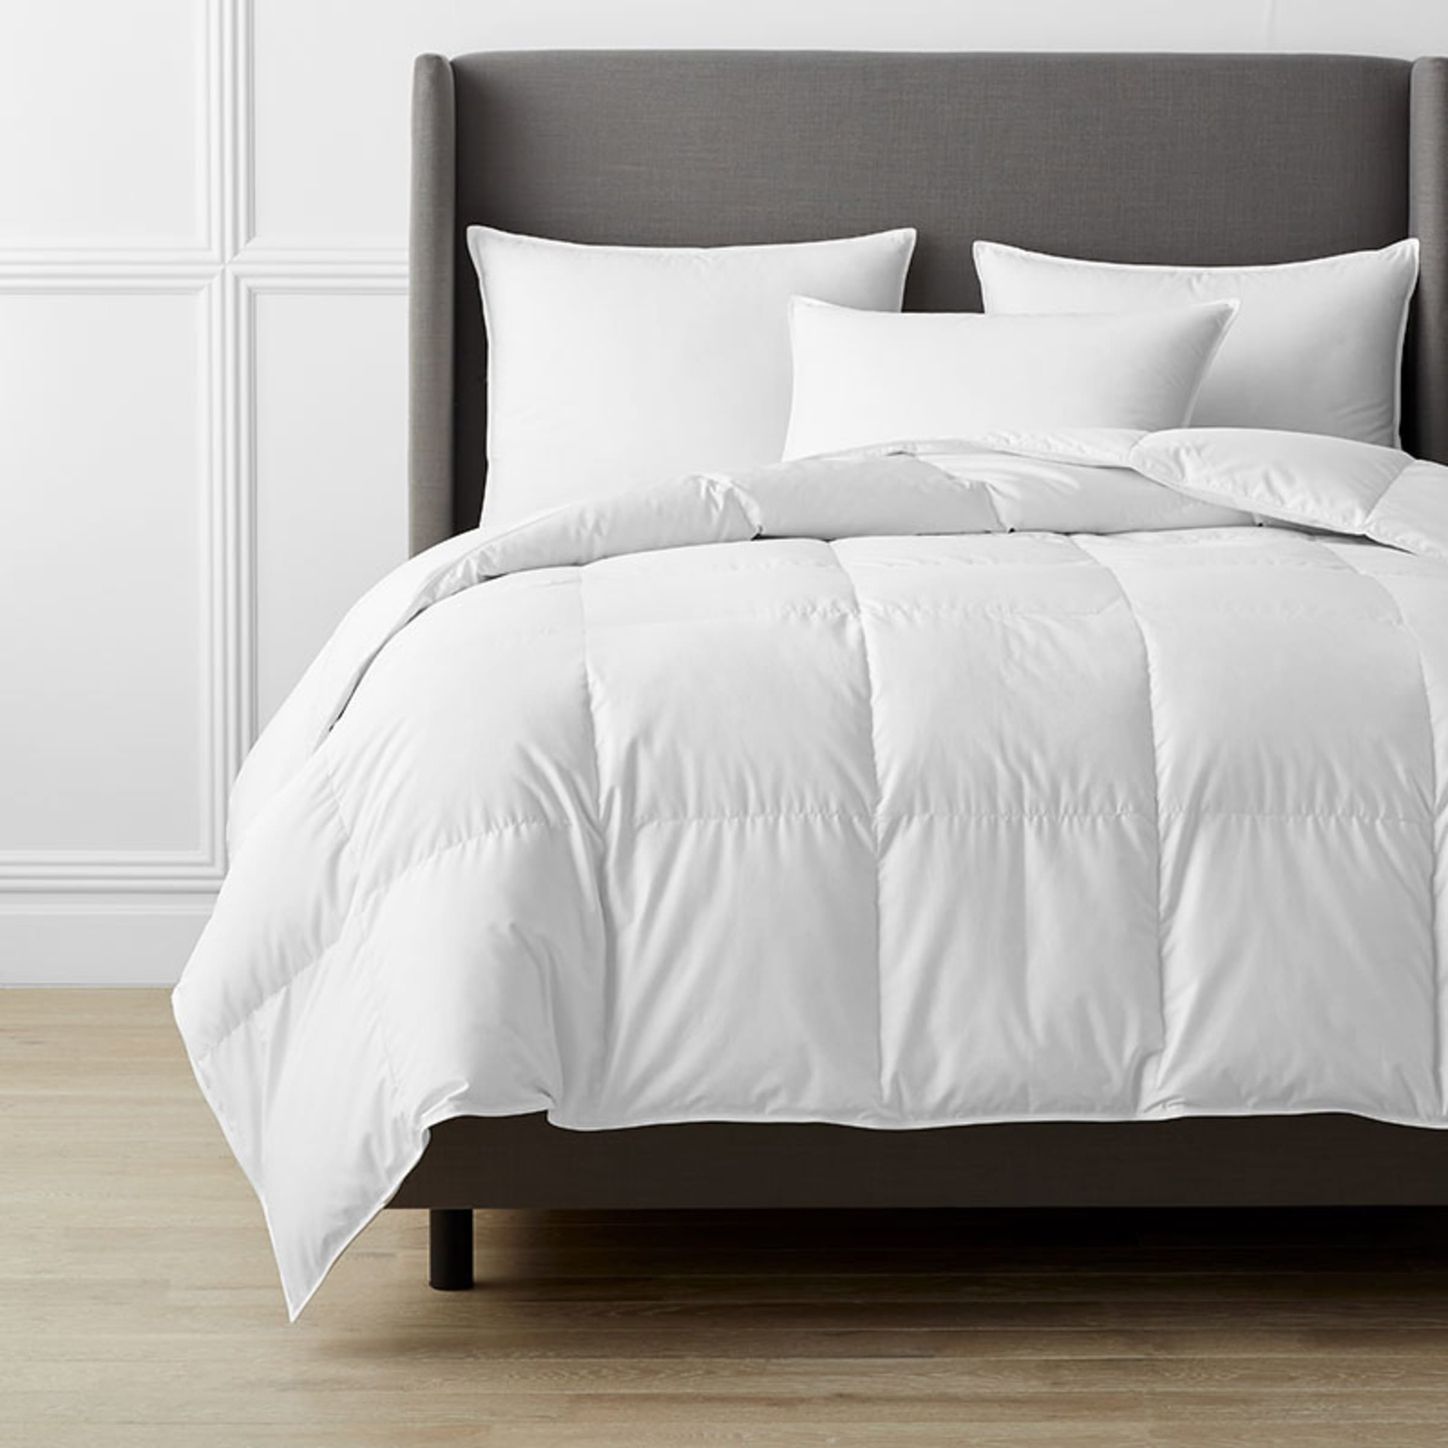 Utopia Bedding King/California King Size Comforter Set with 2 Pillow Shams  - Bedding Comforter Sets - Down Alternative Grey Comforter - Soft and